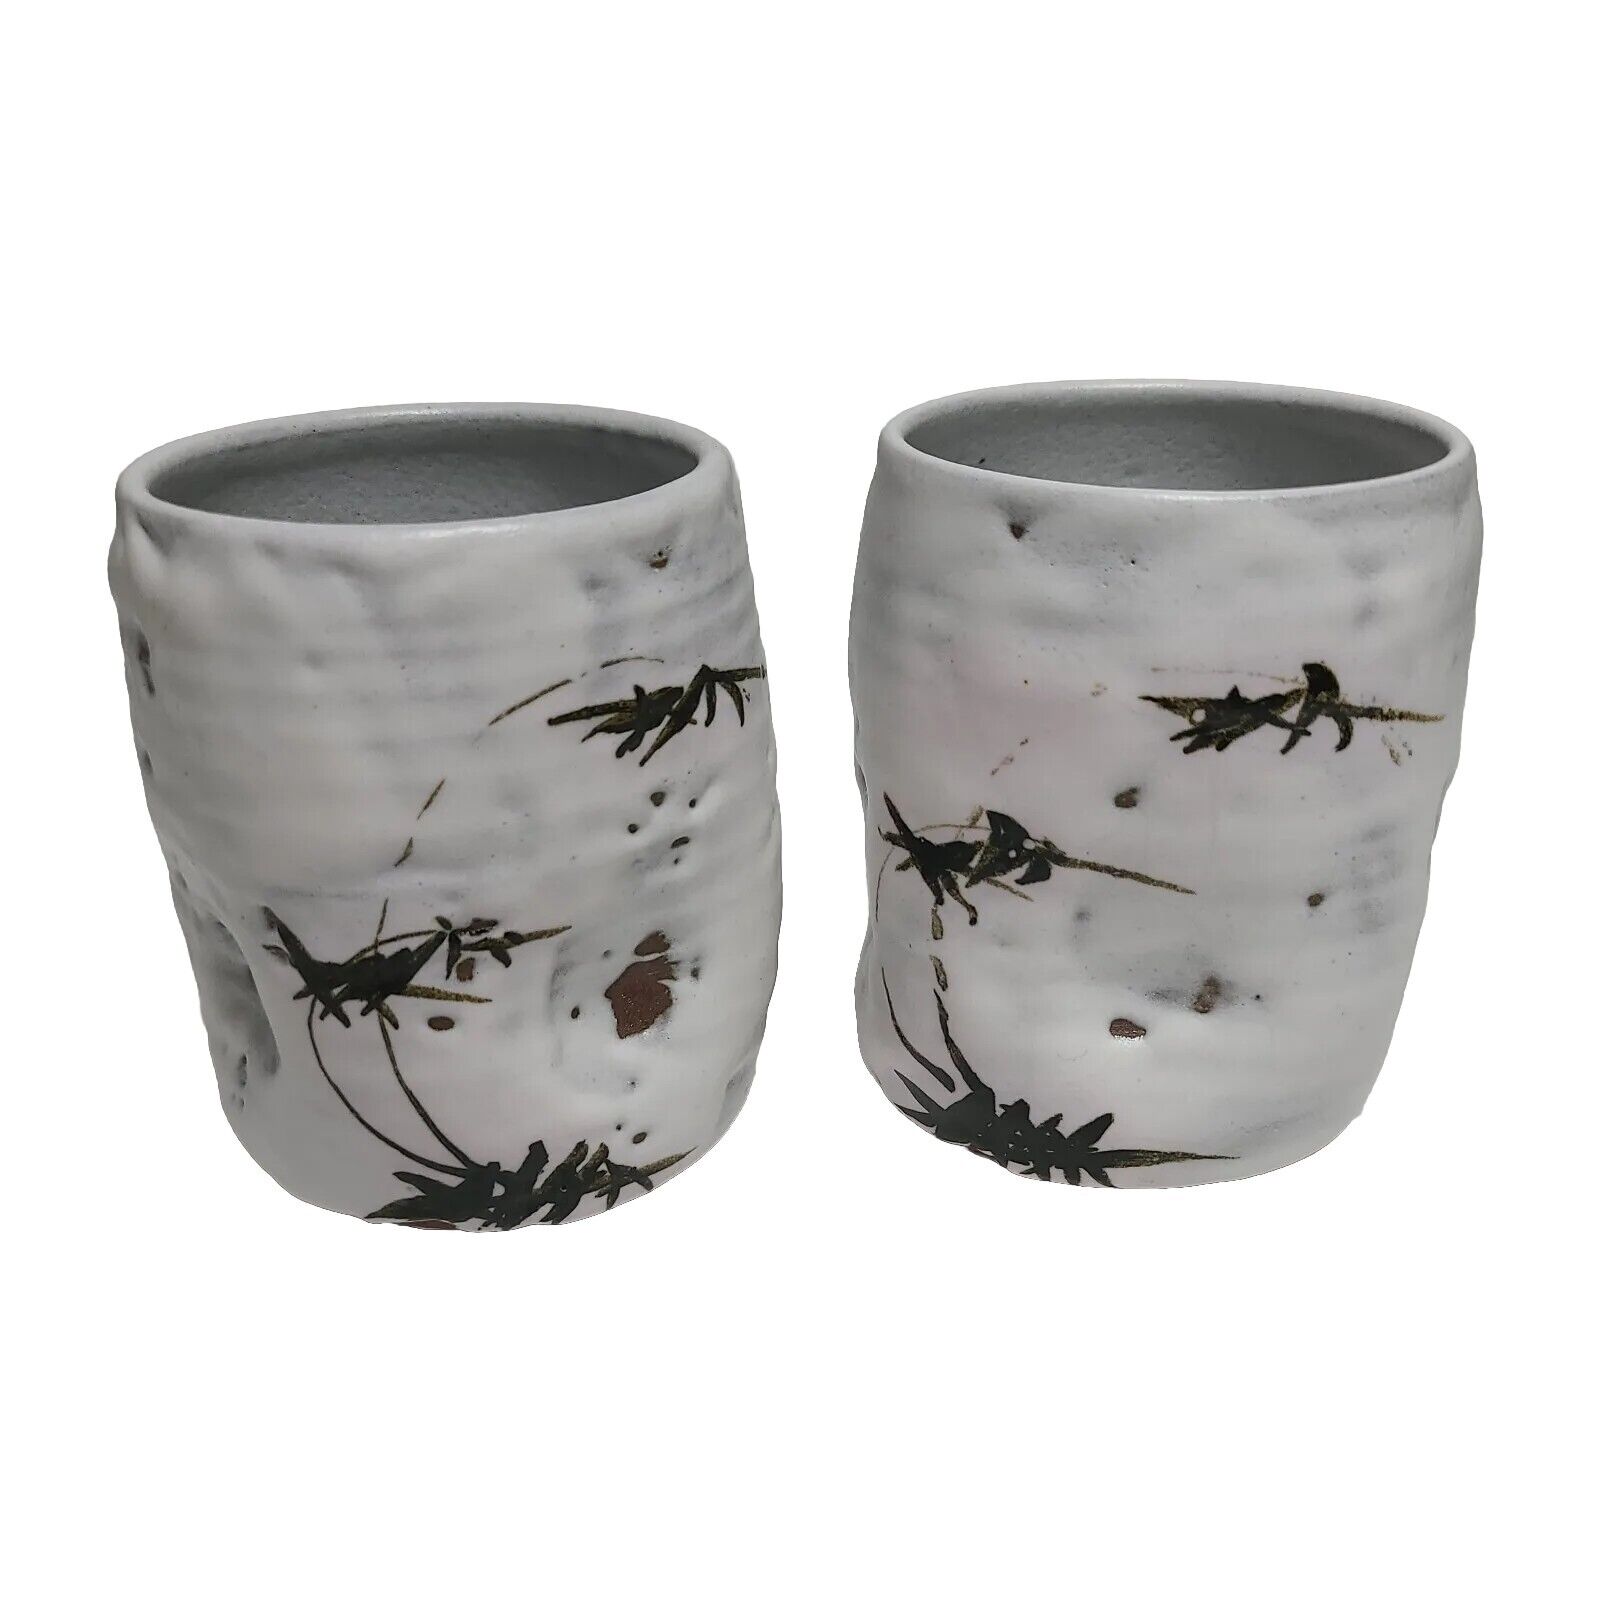 Japanese Handmade Pottery Cups White Glaze Foliage Design Pair